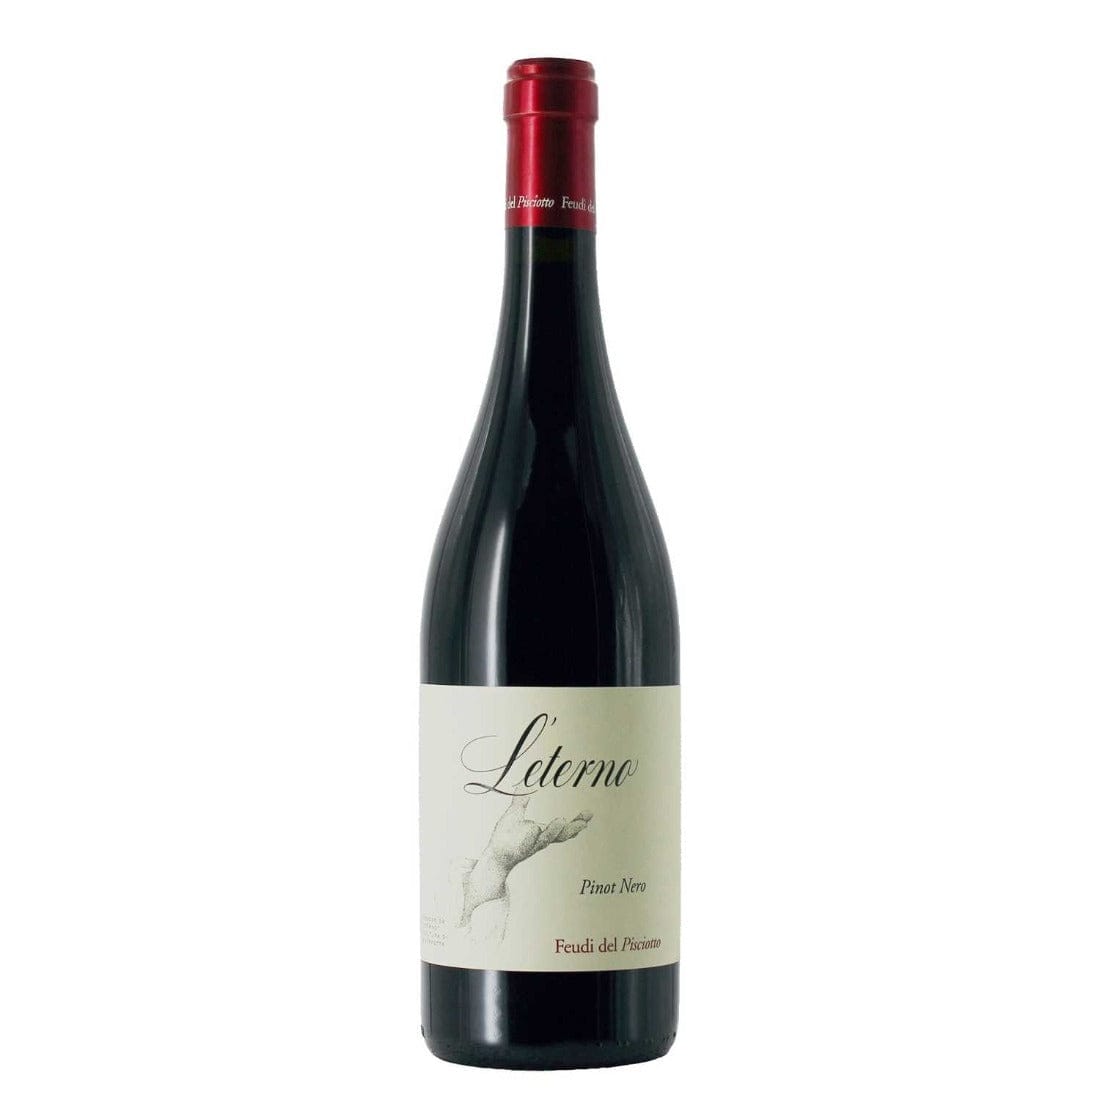 L'Eterno 2015 Pinot Nero Igt Terre Siciliane - Feudi del Pisciotto-Vinolog24.com